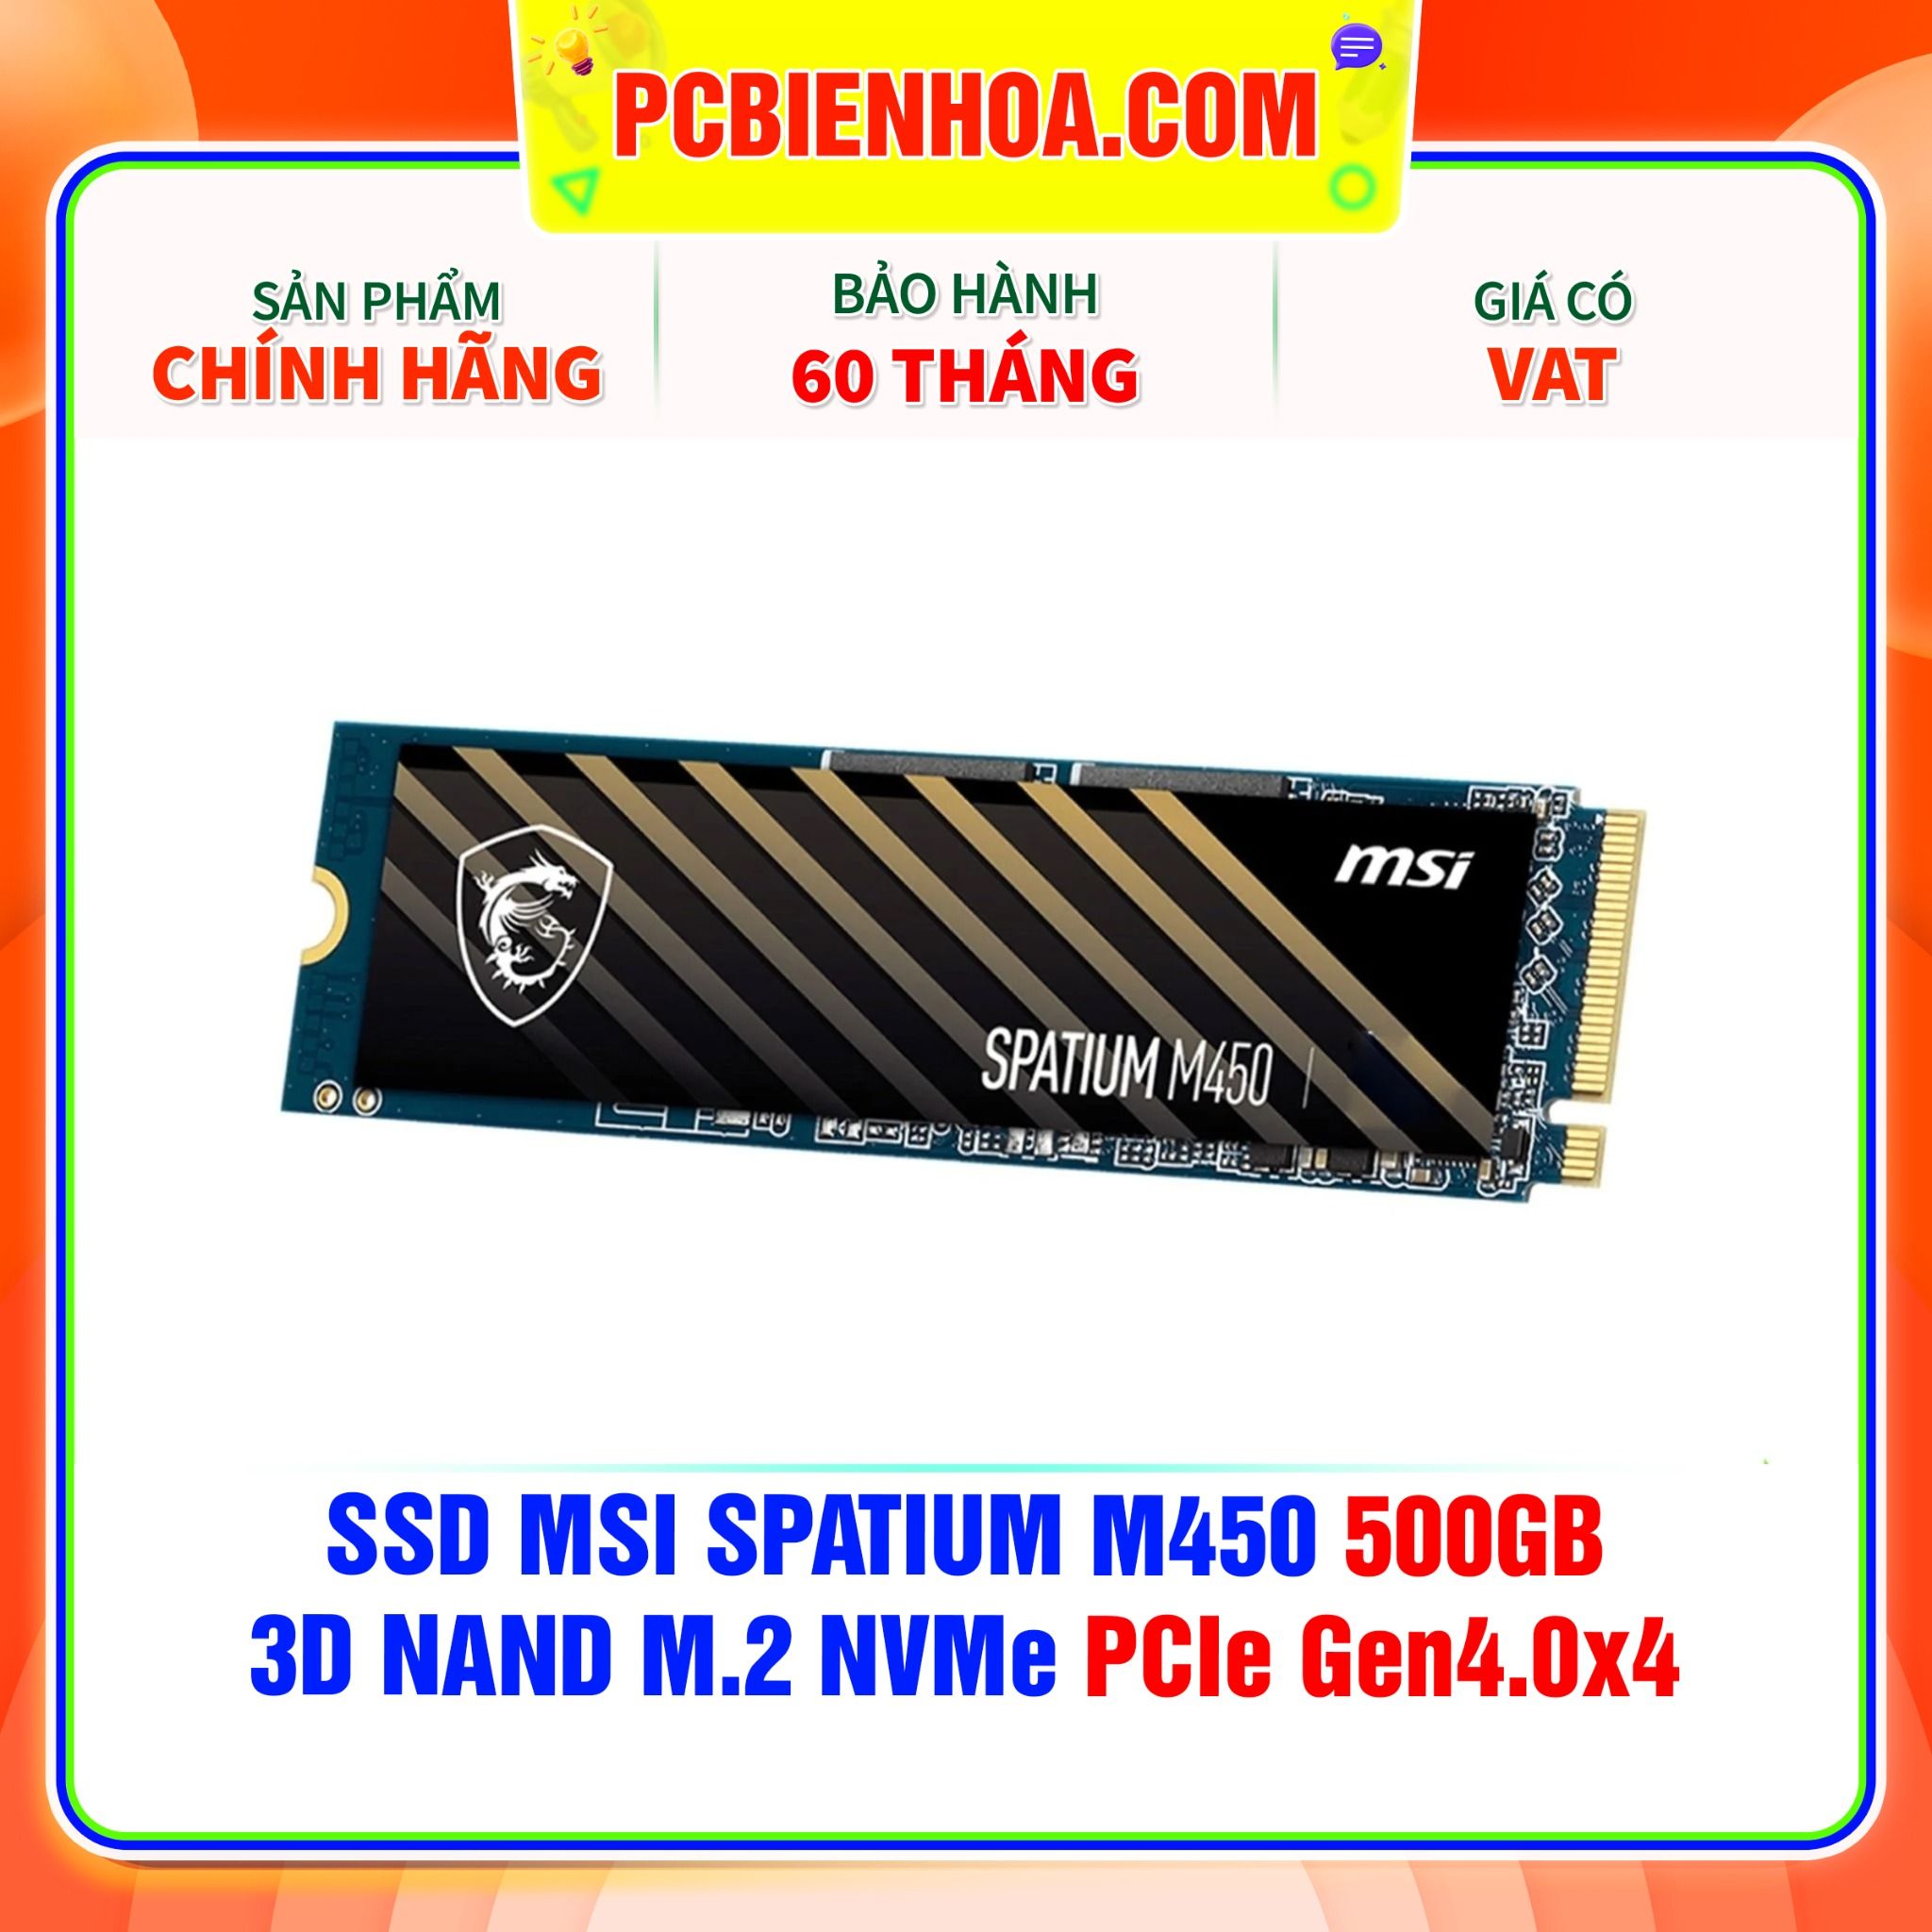  SSD MSI SPATIUM M450 500GB - 3D NAND M.2 NVMe PCIe Gen4.0x4 